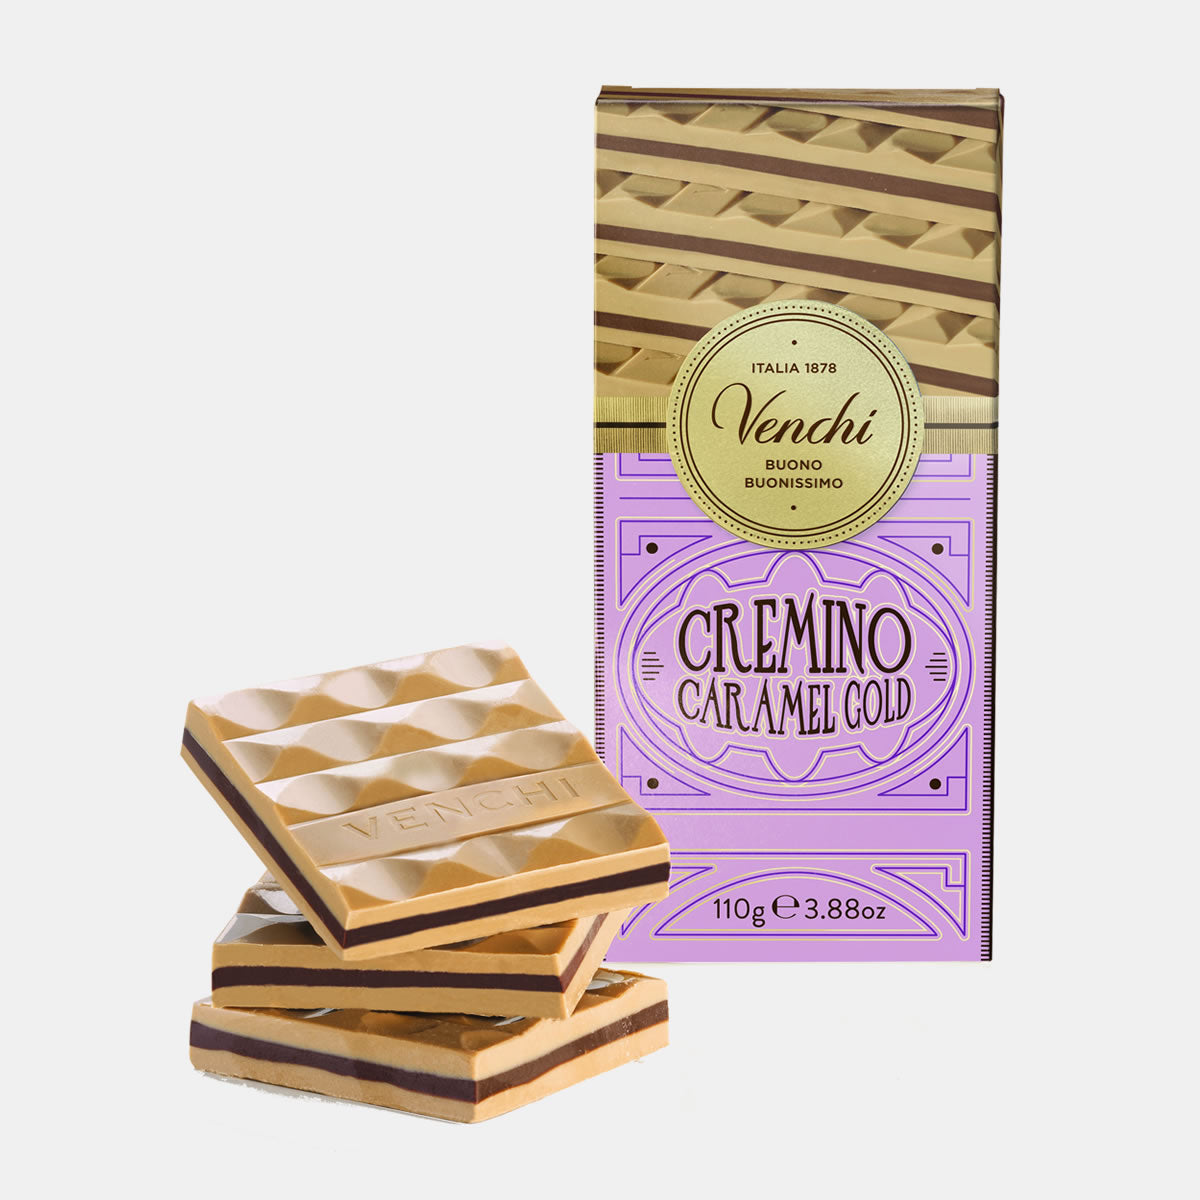 Cremino Caramel Gold bar